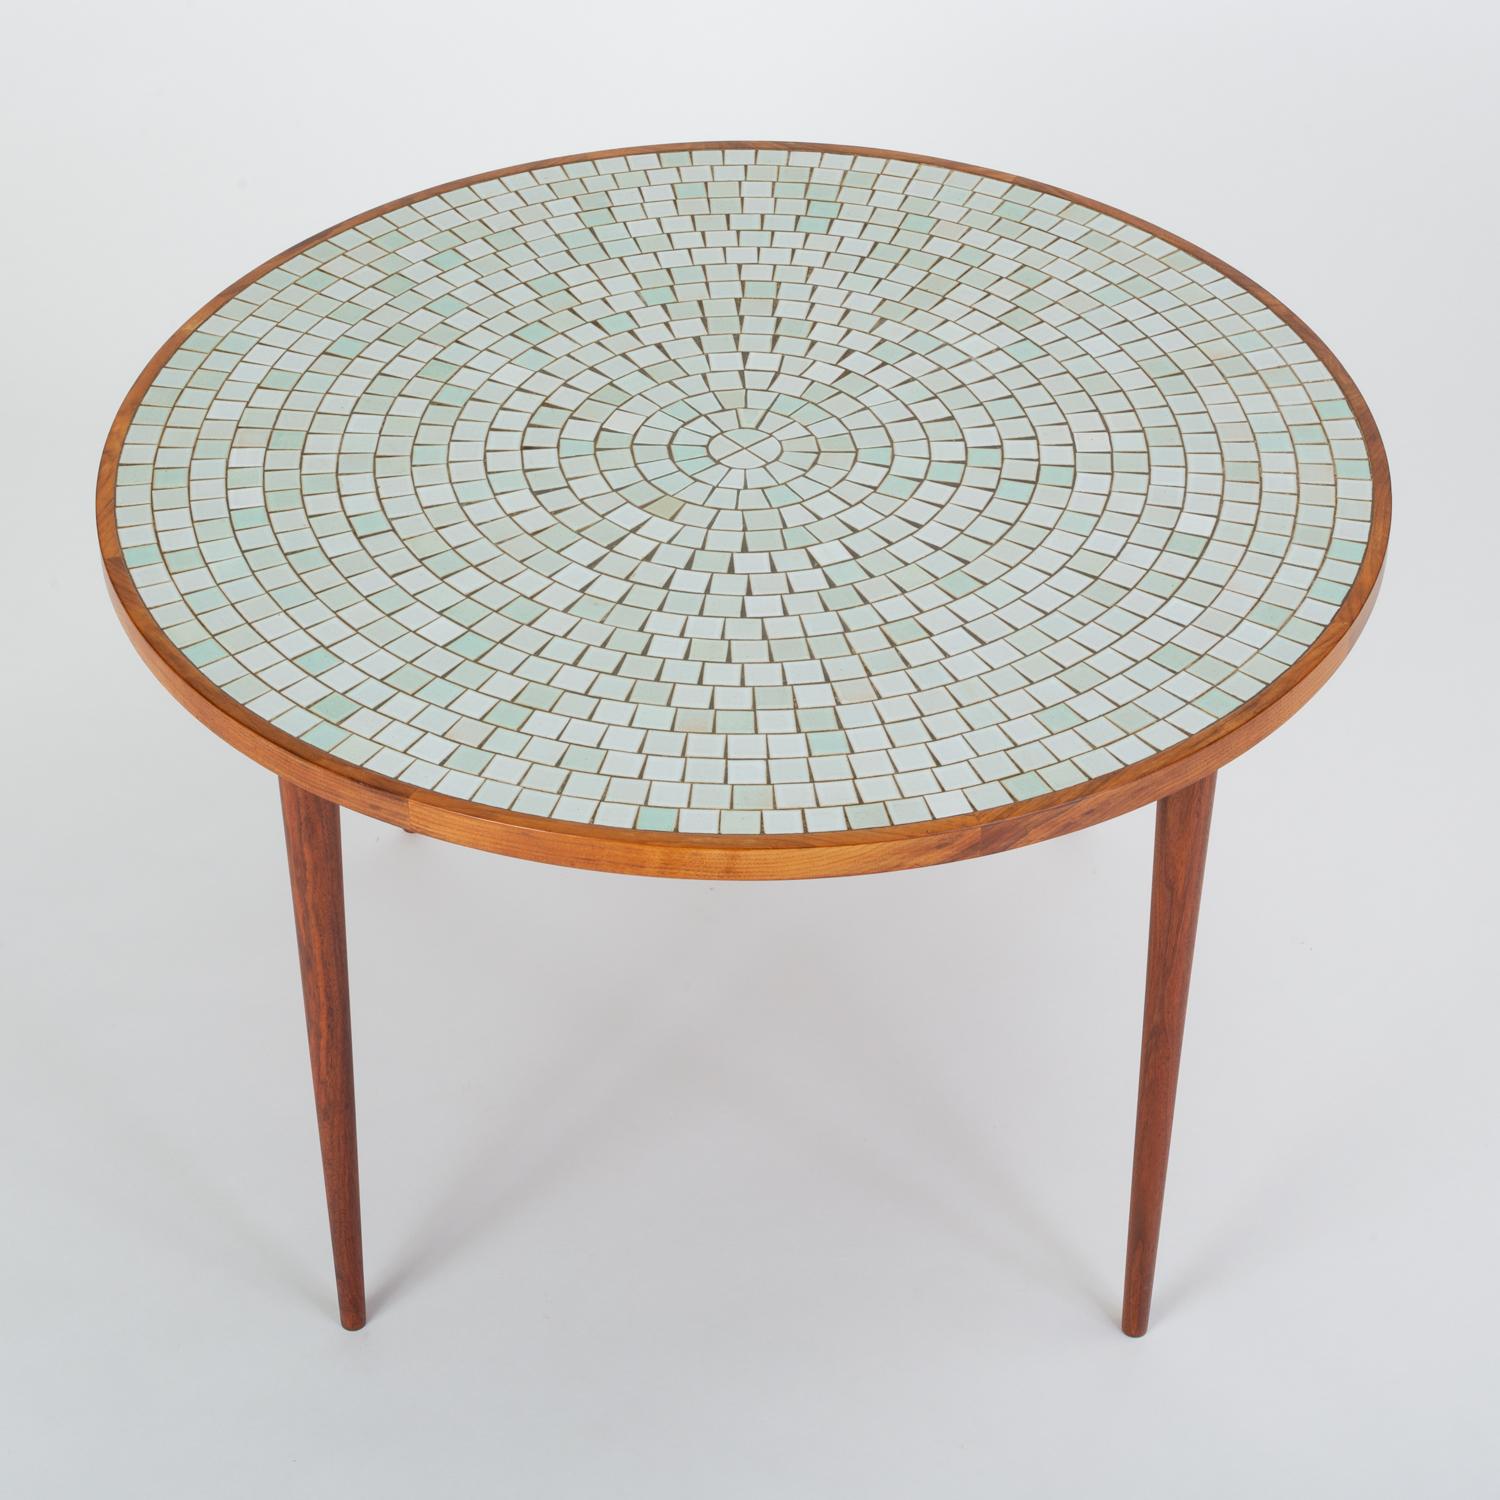 Amsterdam School Tile-Top Dining Table by Gordon & Jane Martz for Marshall Studios